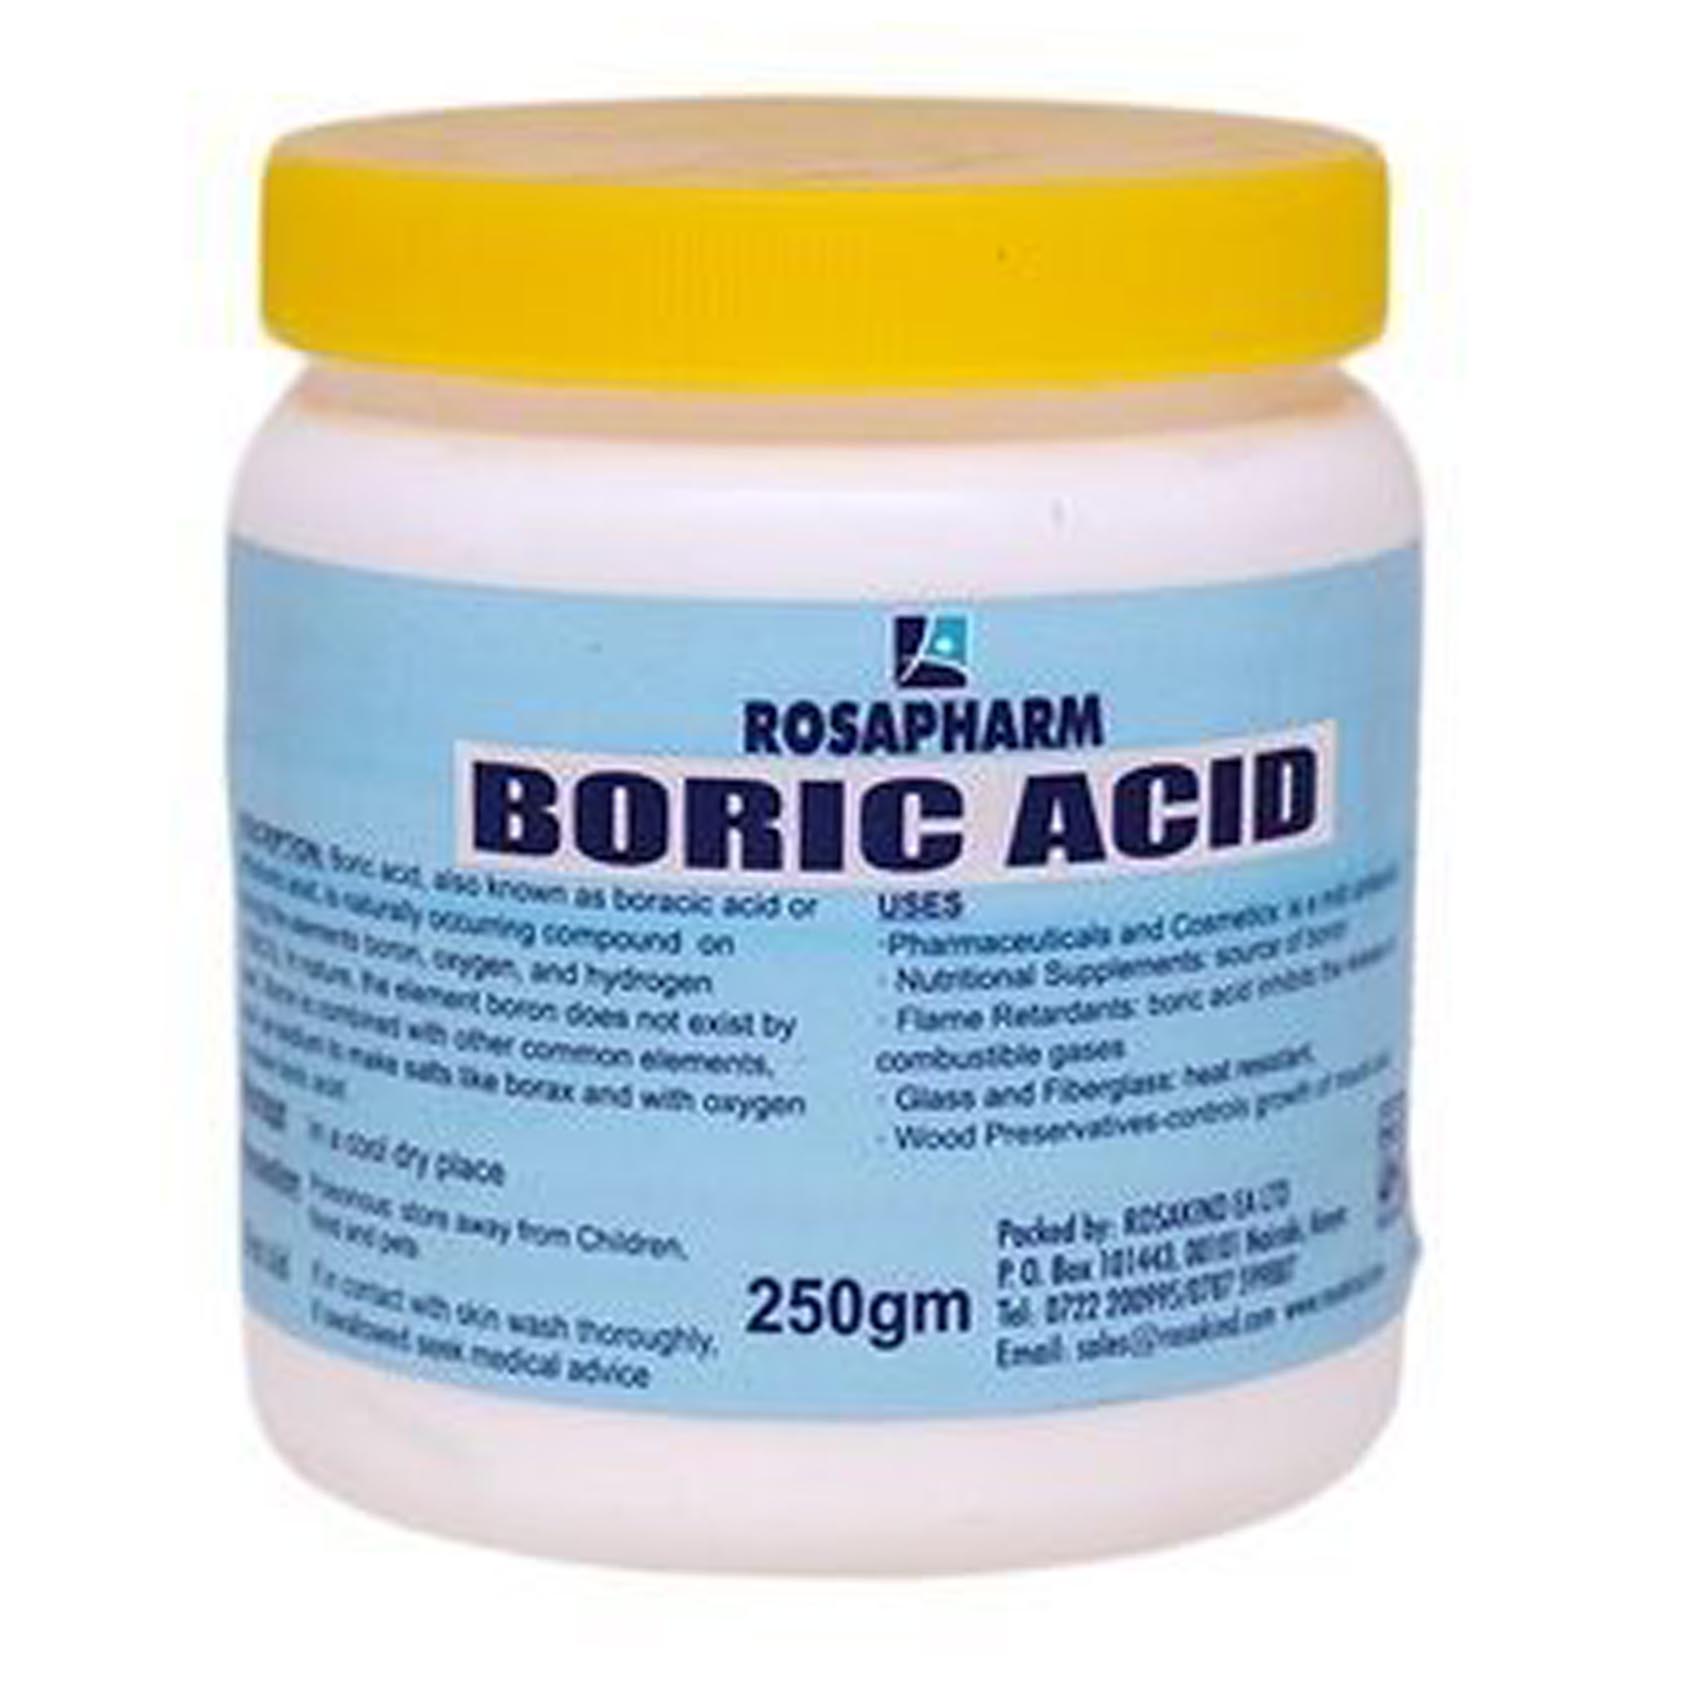 Rosapharm Boric Acid 250G